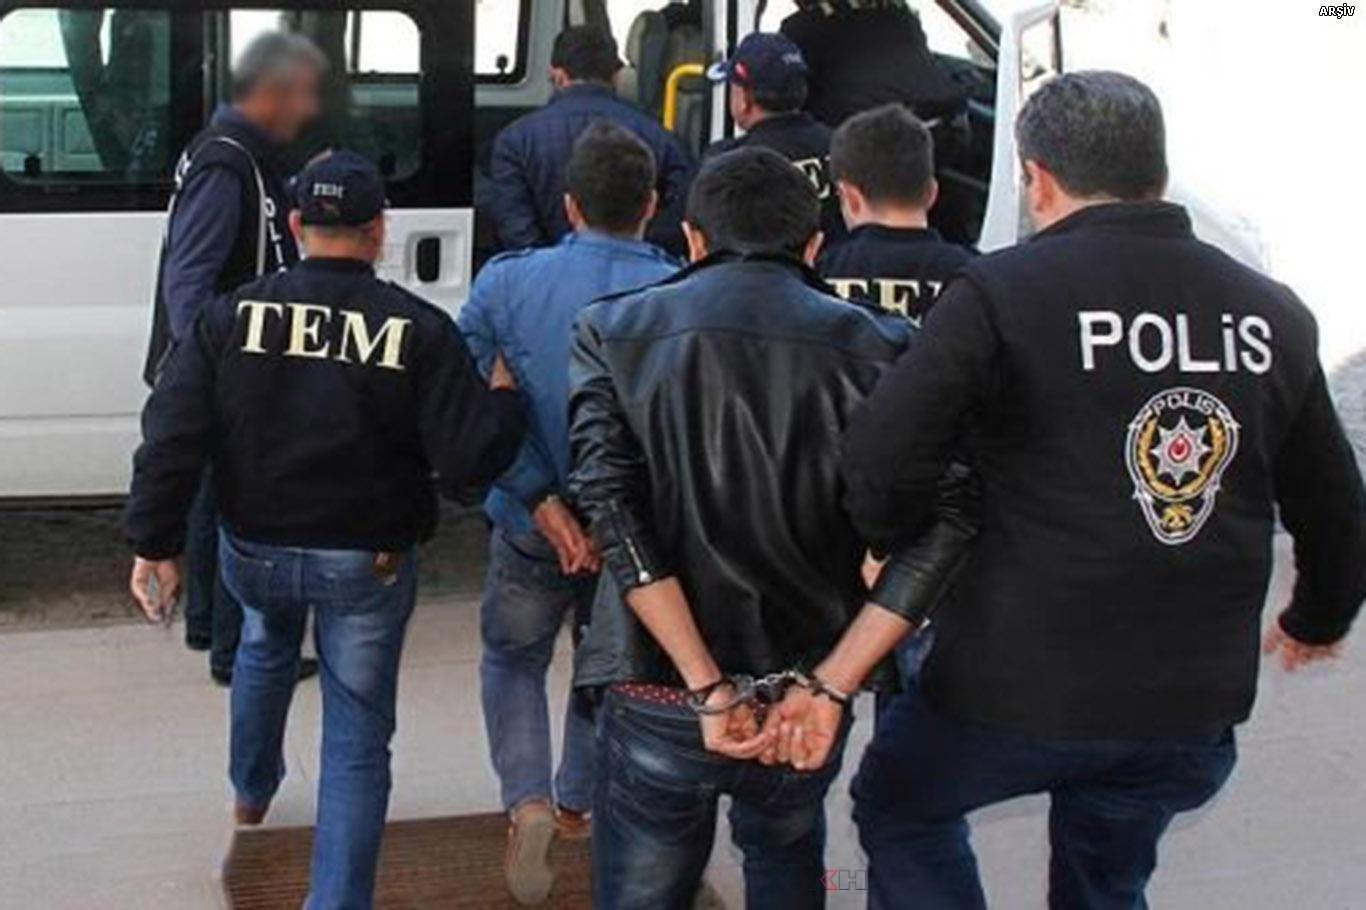 23 PKK-linked suspects arrested in Hakkari province of eastern Turkey